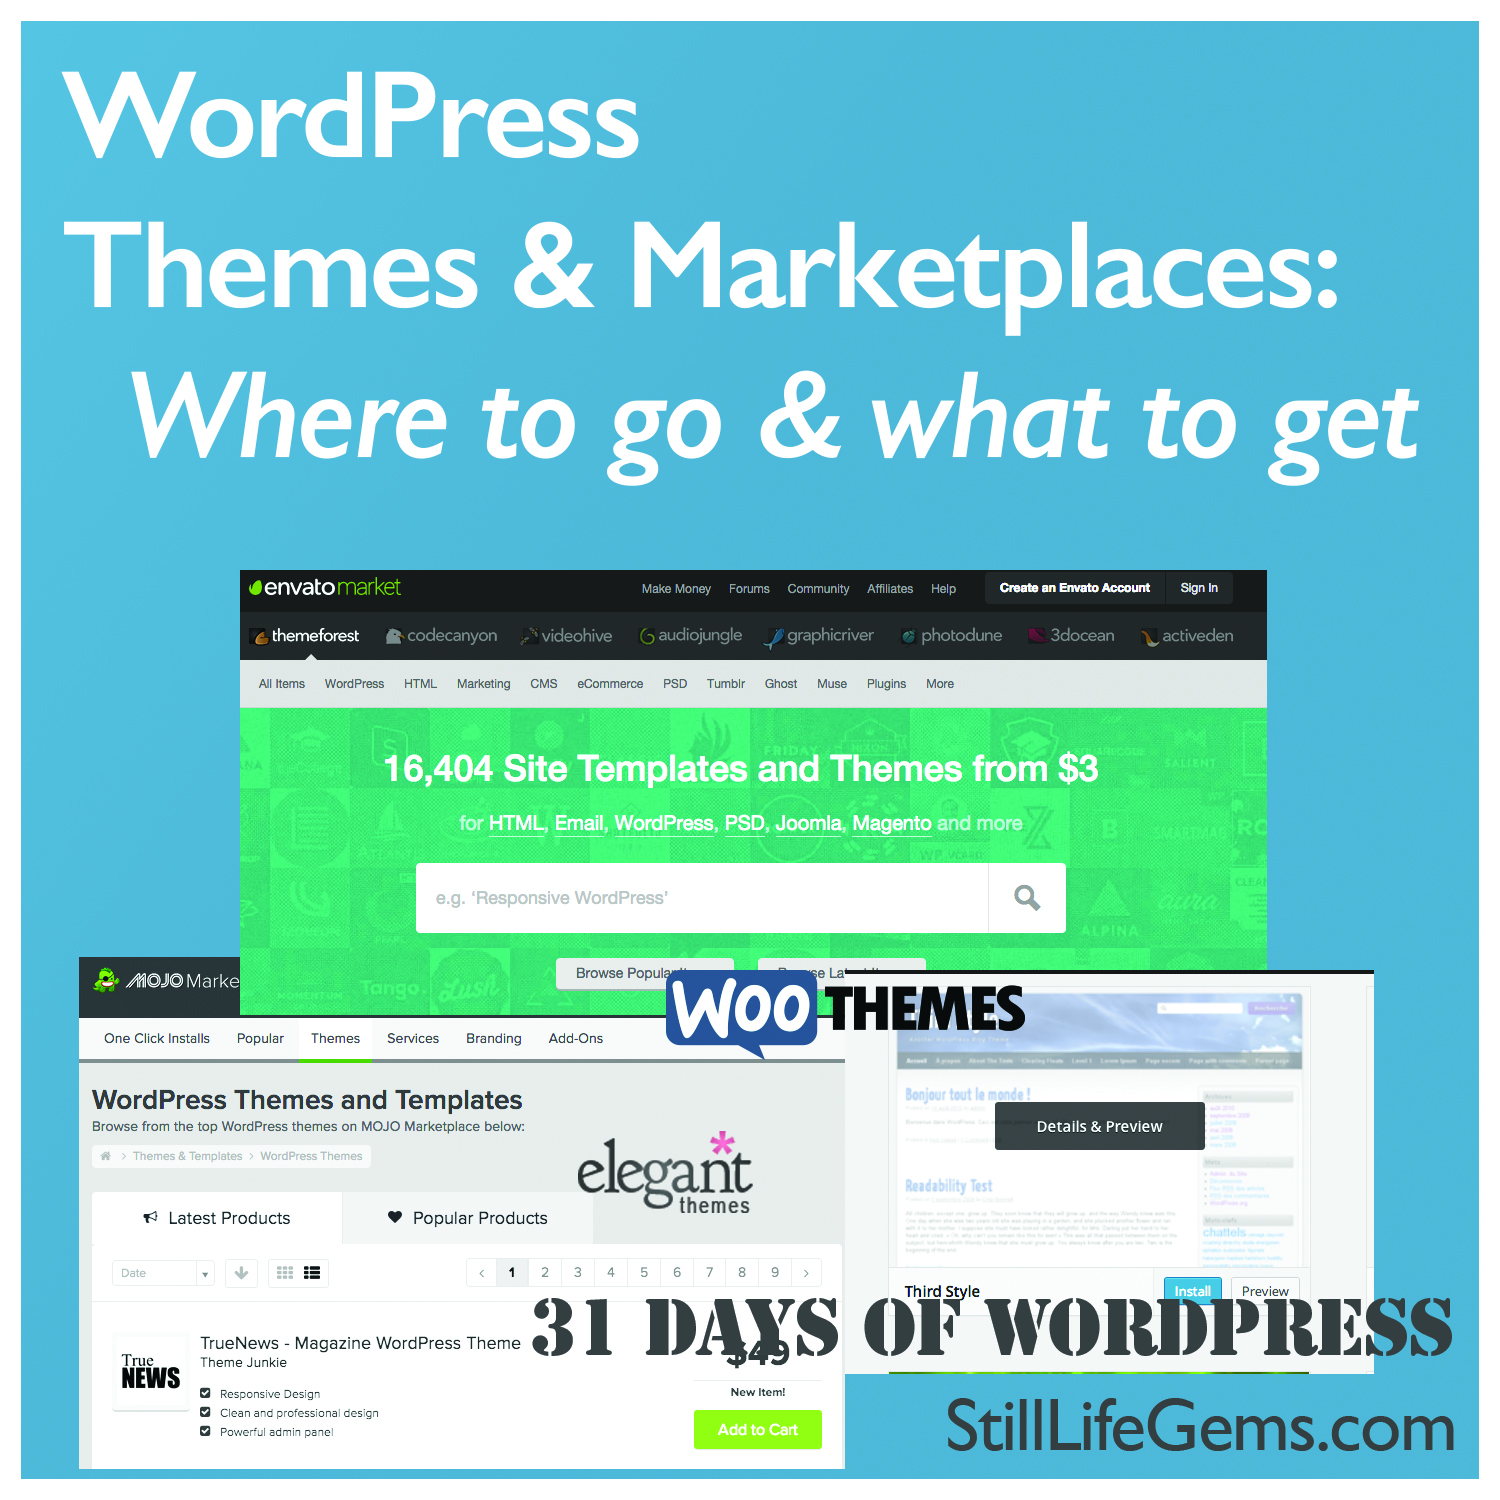 WordPress Themes & Marketplaces